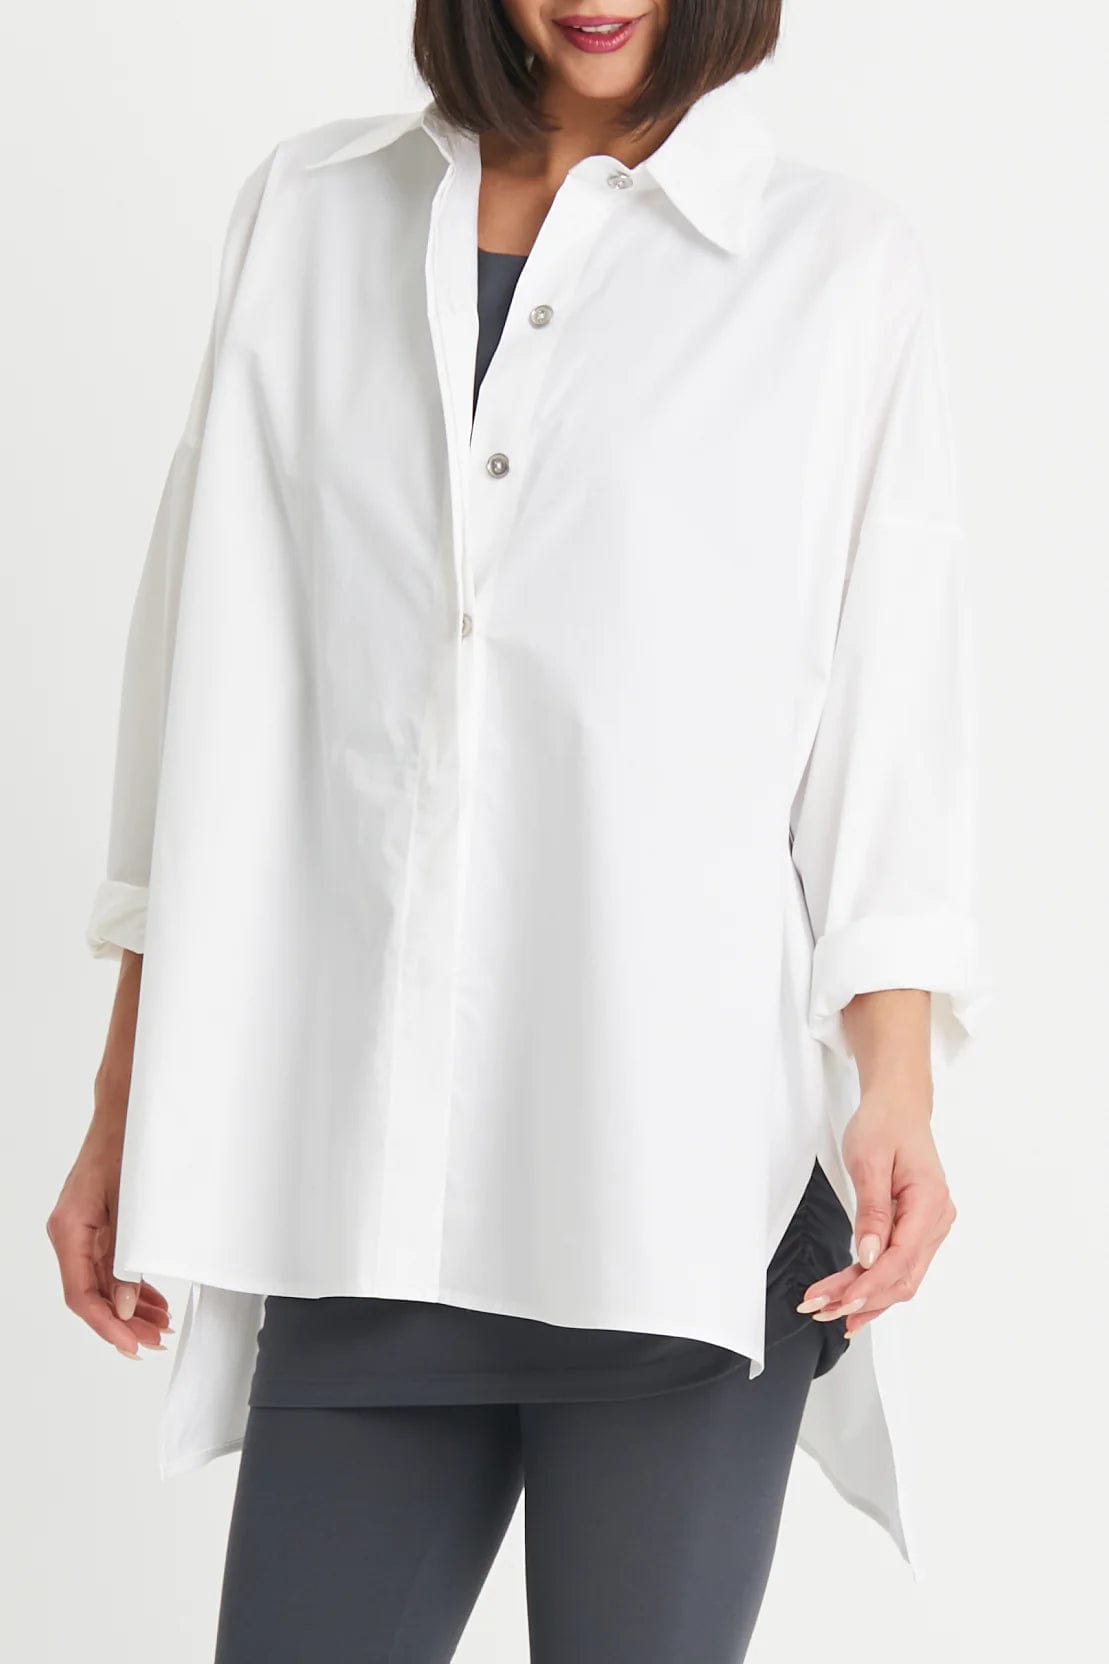 PLANET by Lauren G Women's Shirts & Tops Vanilla / One Size E-Z Shirt